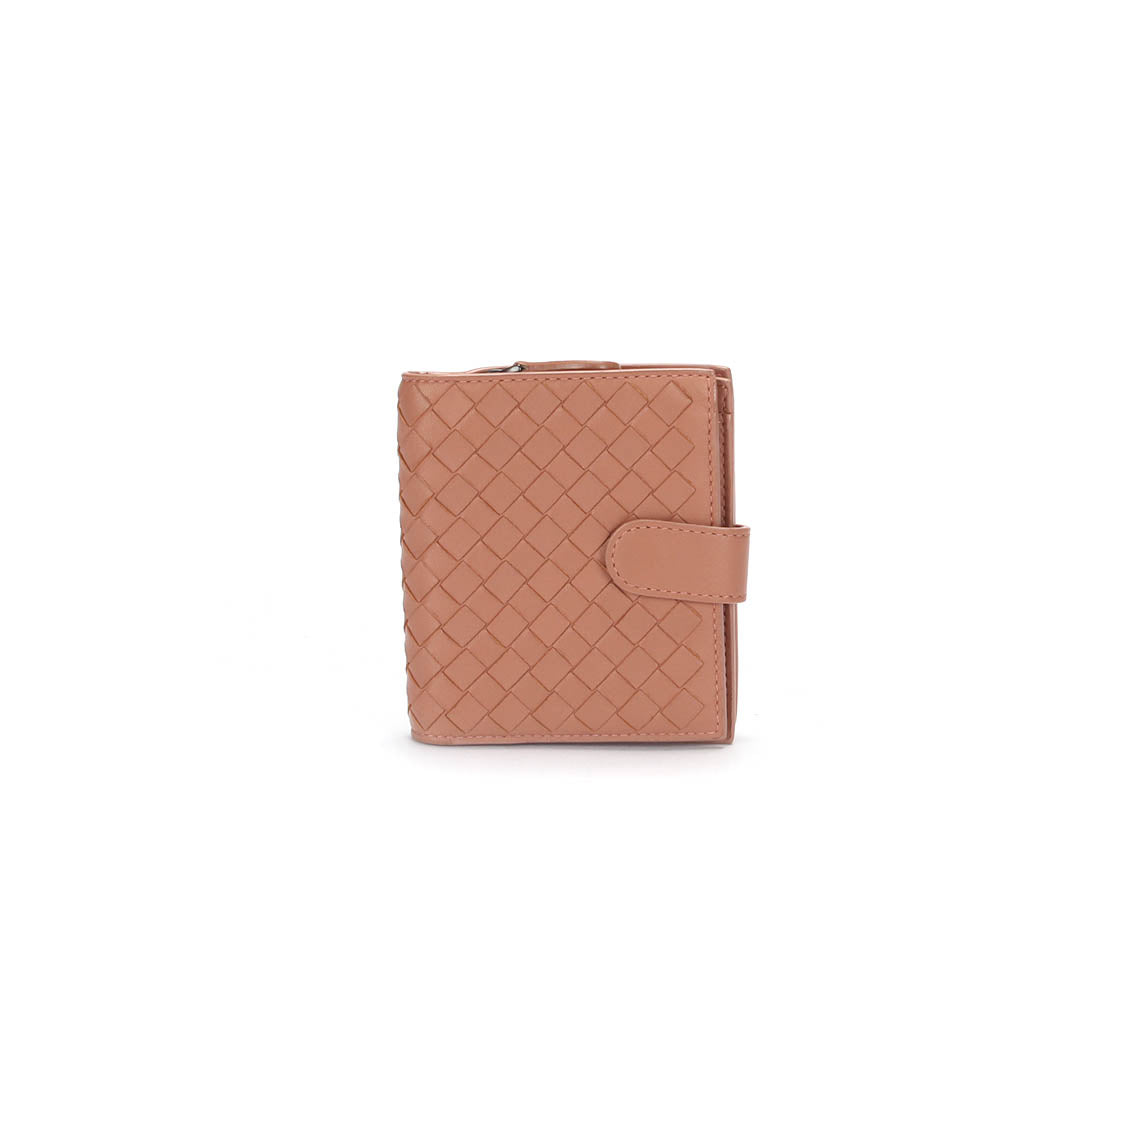 Intrecciato Leather Compact Wallet